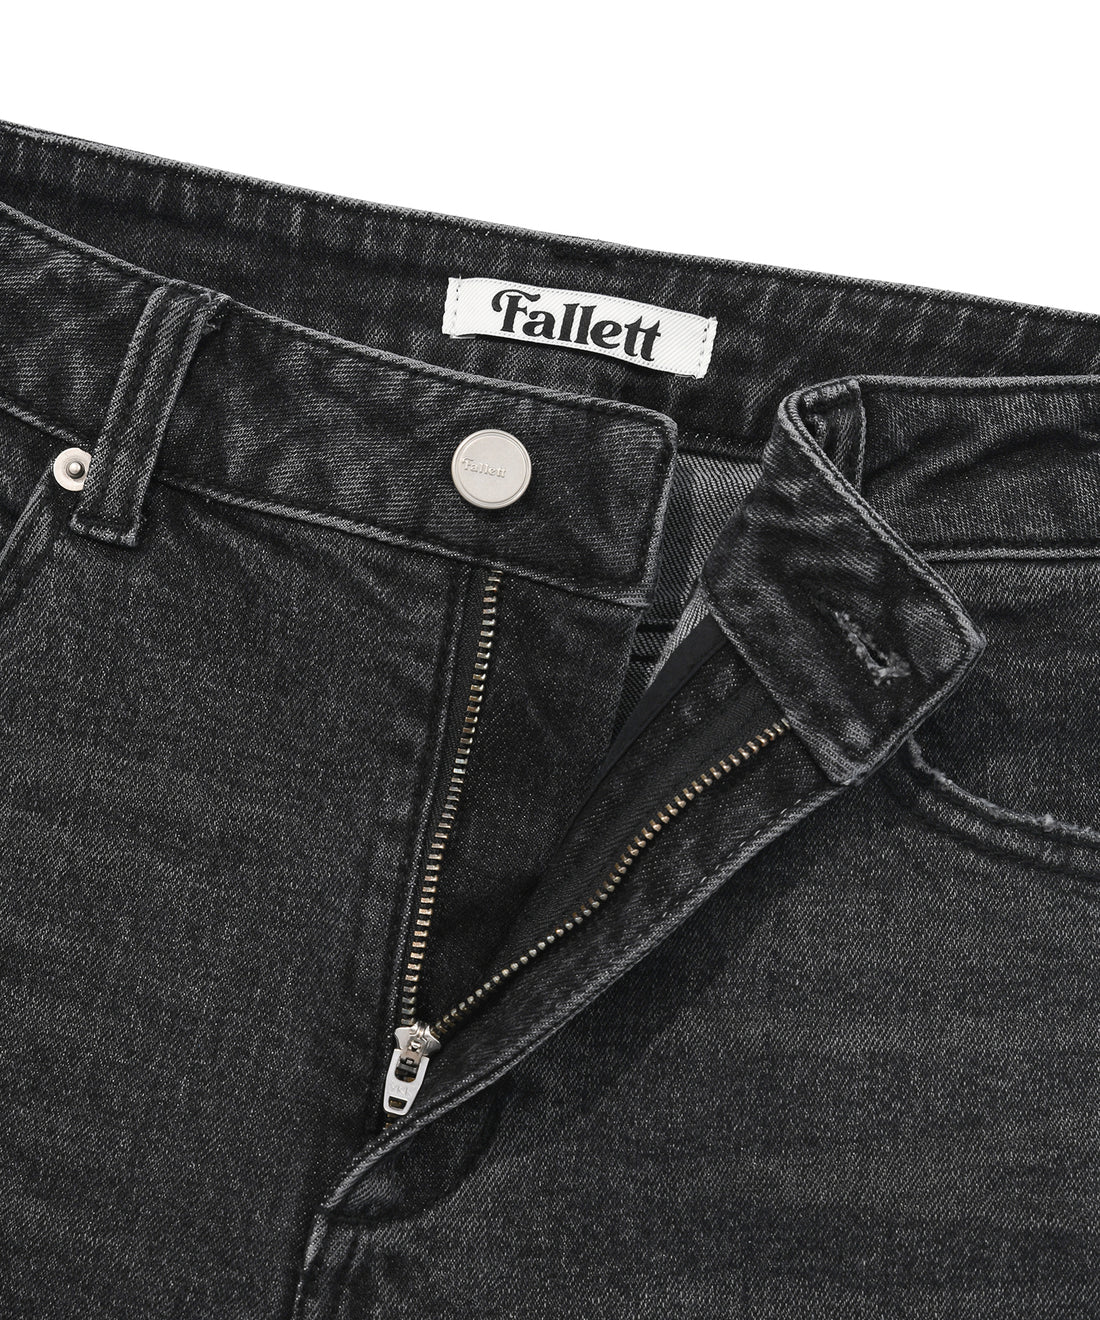 FALLETT Bootcut Denim Pants Charcoal